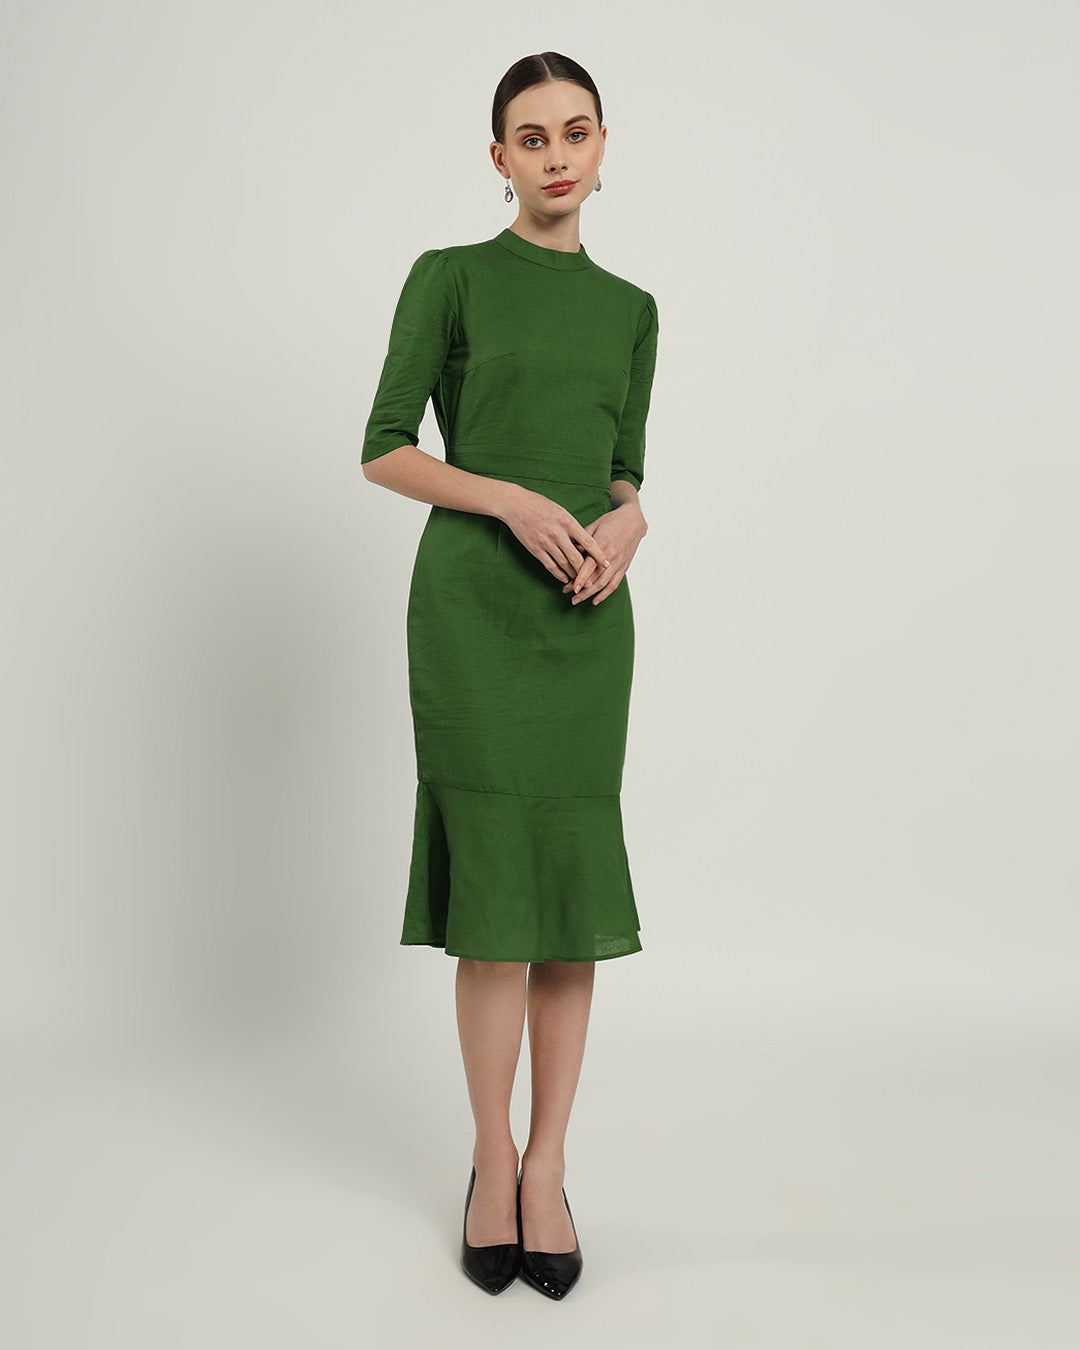 The Charlotte Emerald Cotton Dress